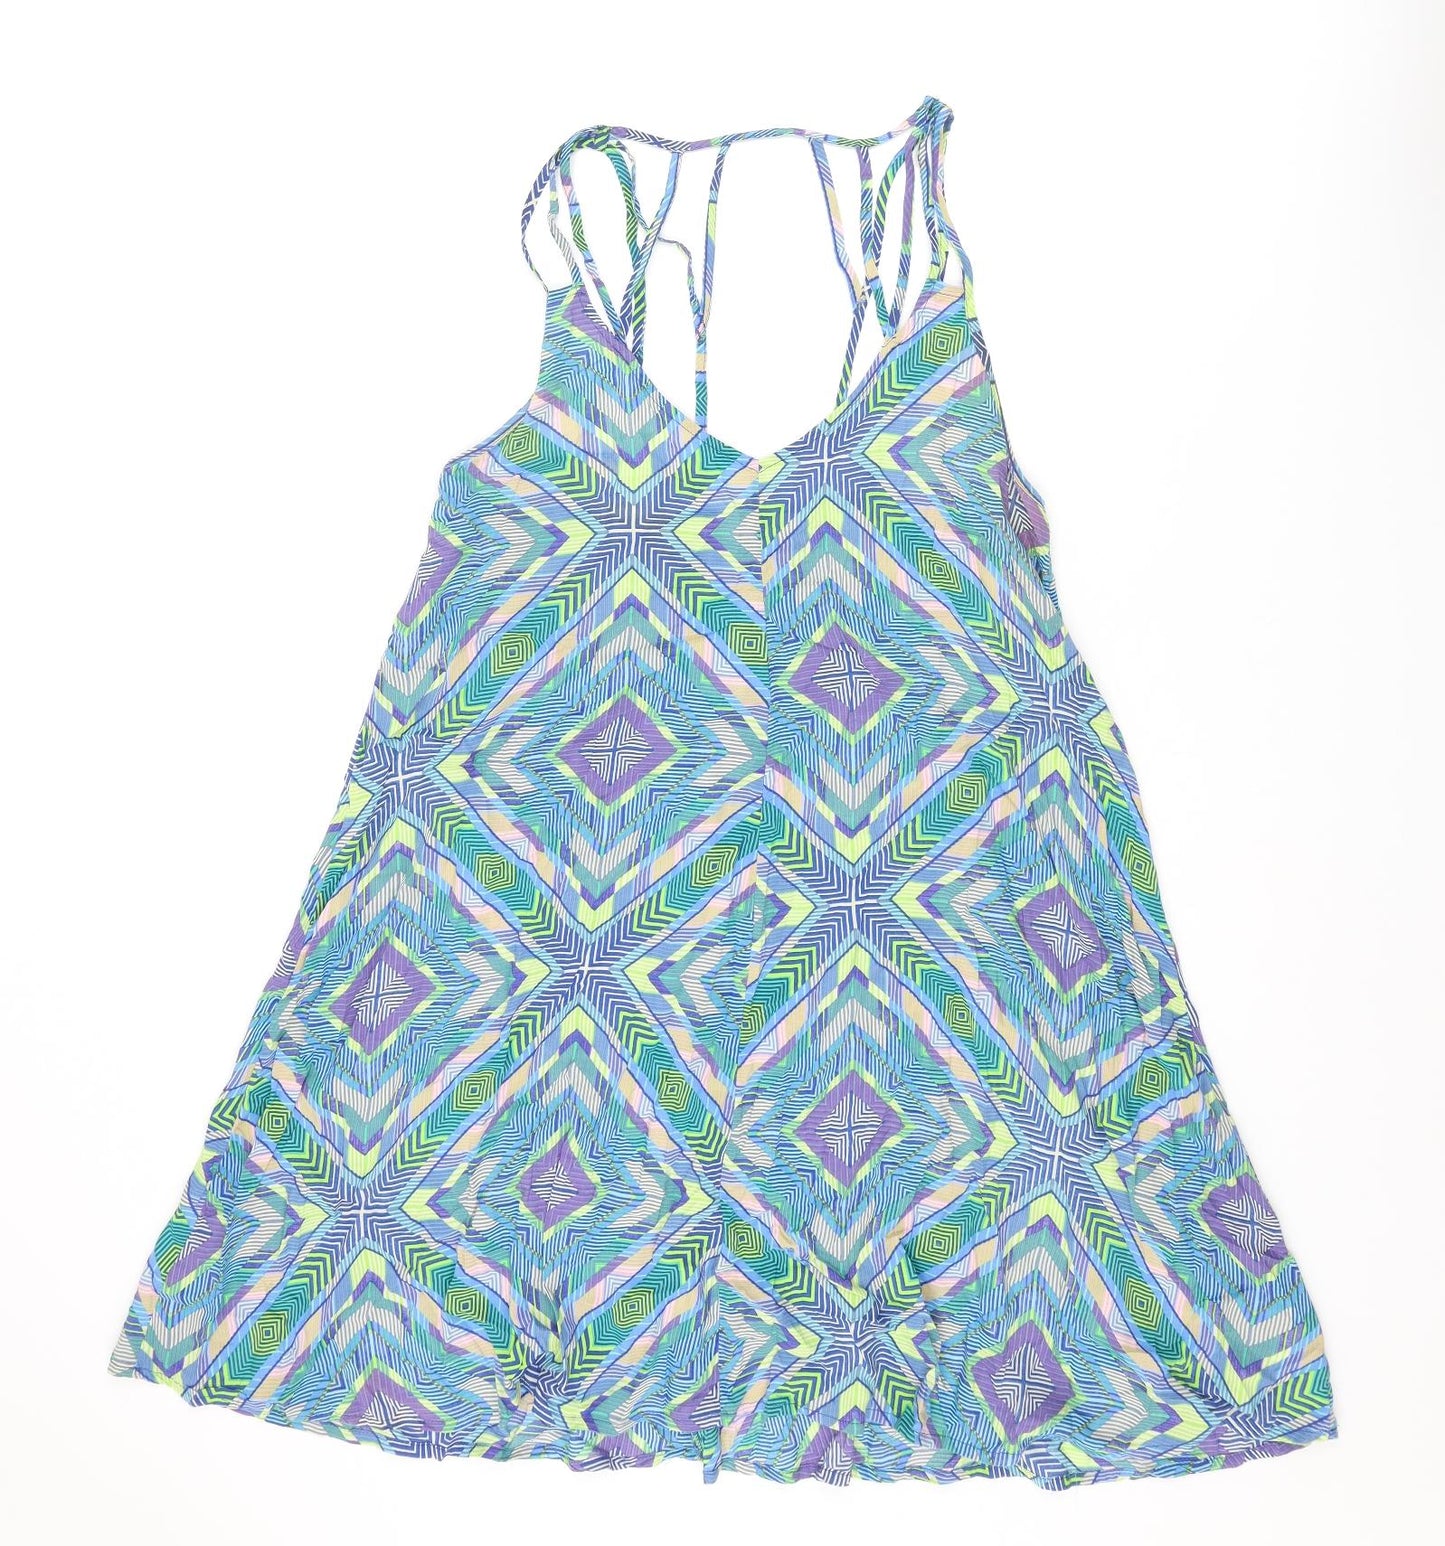 NEXT Womens Multicoloured Geometric Viscose A-Line Size 14 V-Neck Pullover